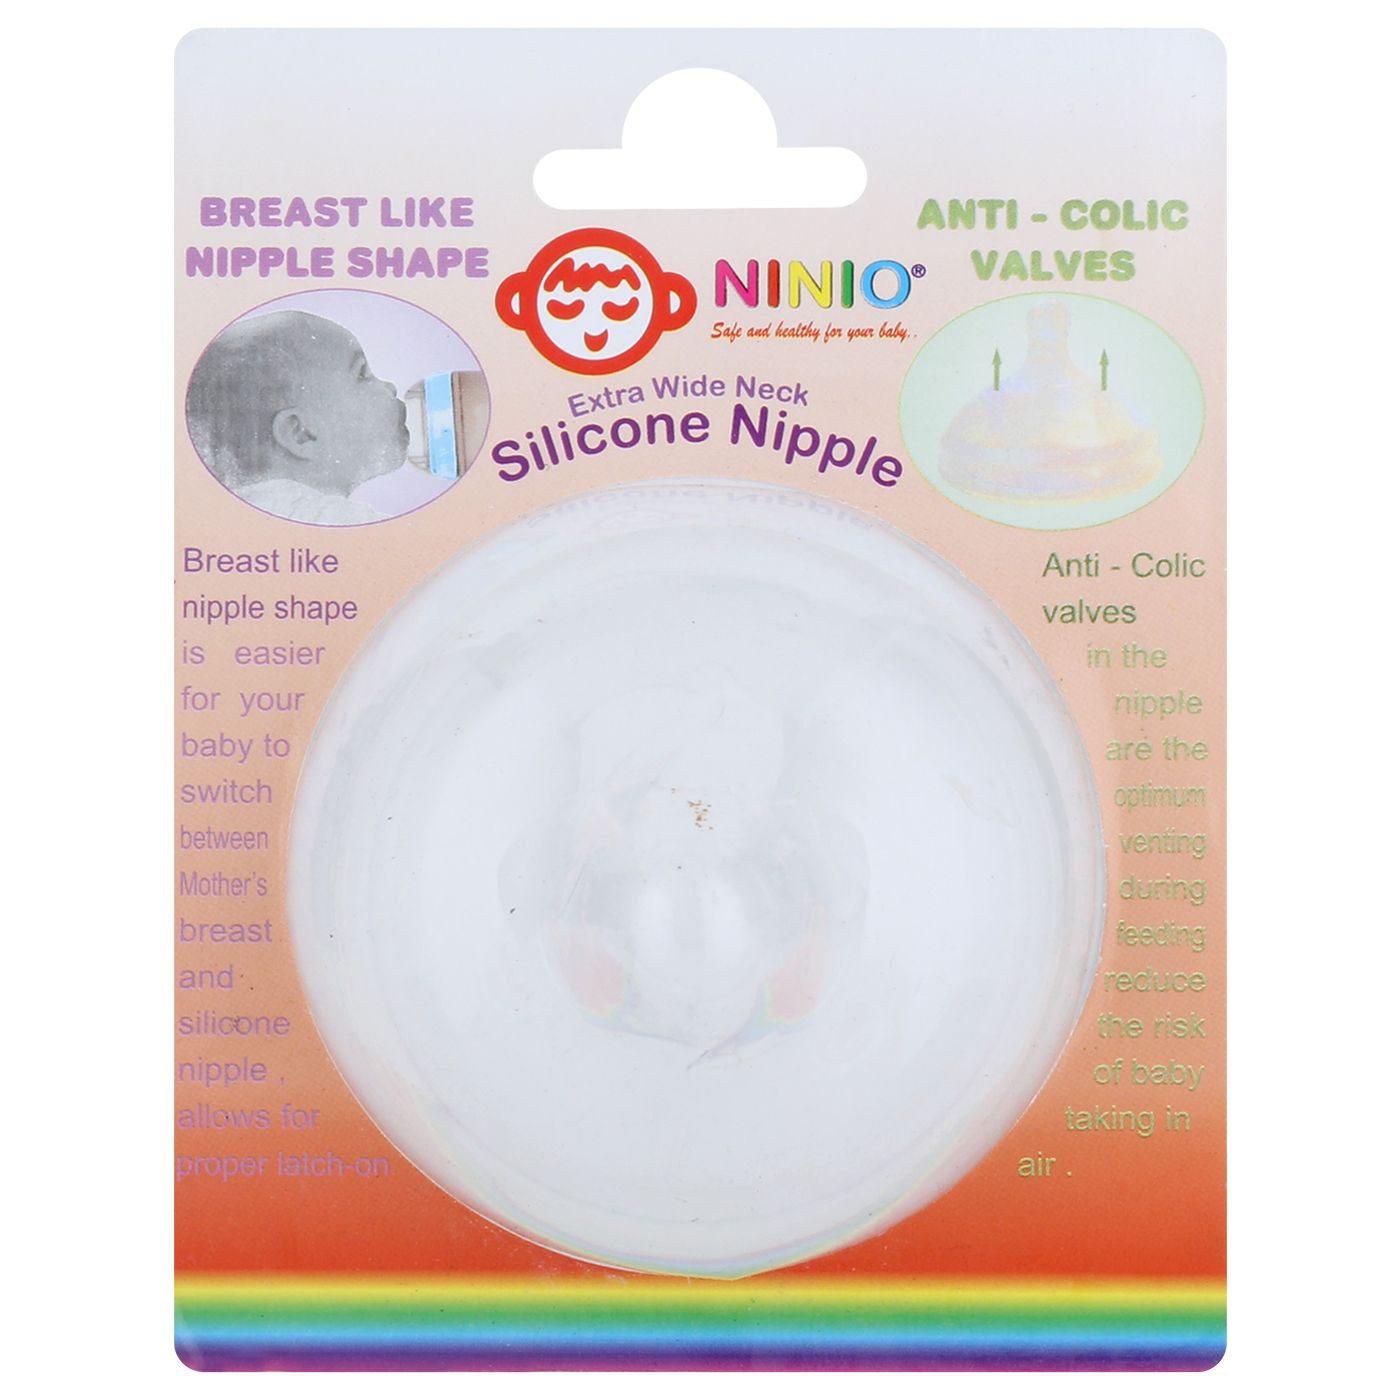 Ninio Extra Wide Neck Silicone Nipple - 1